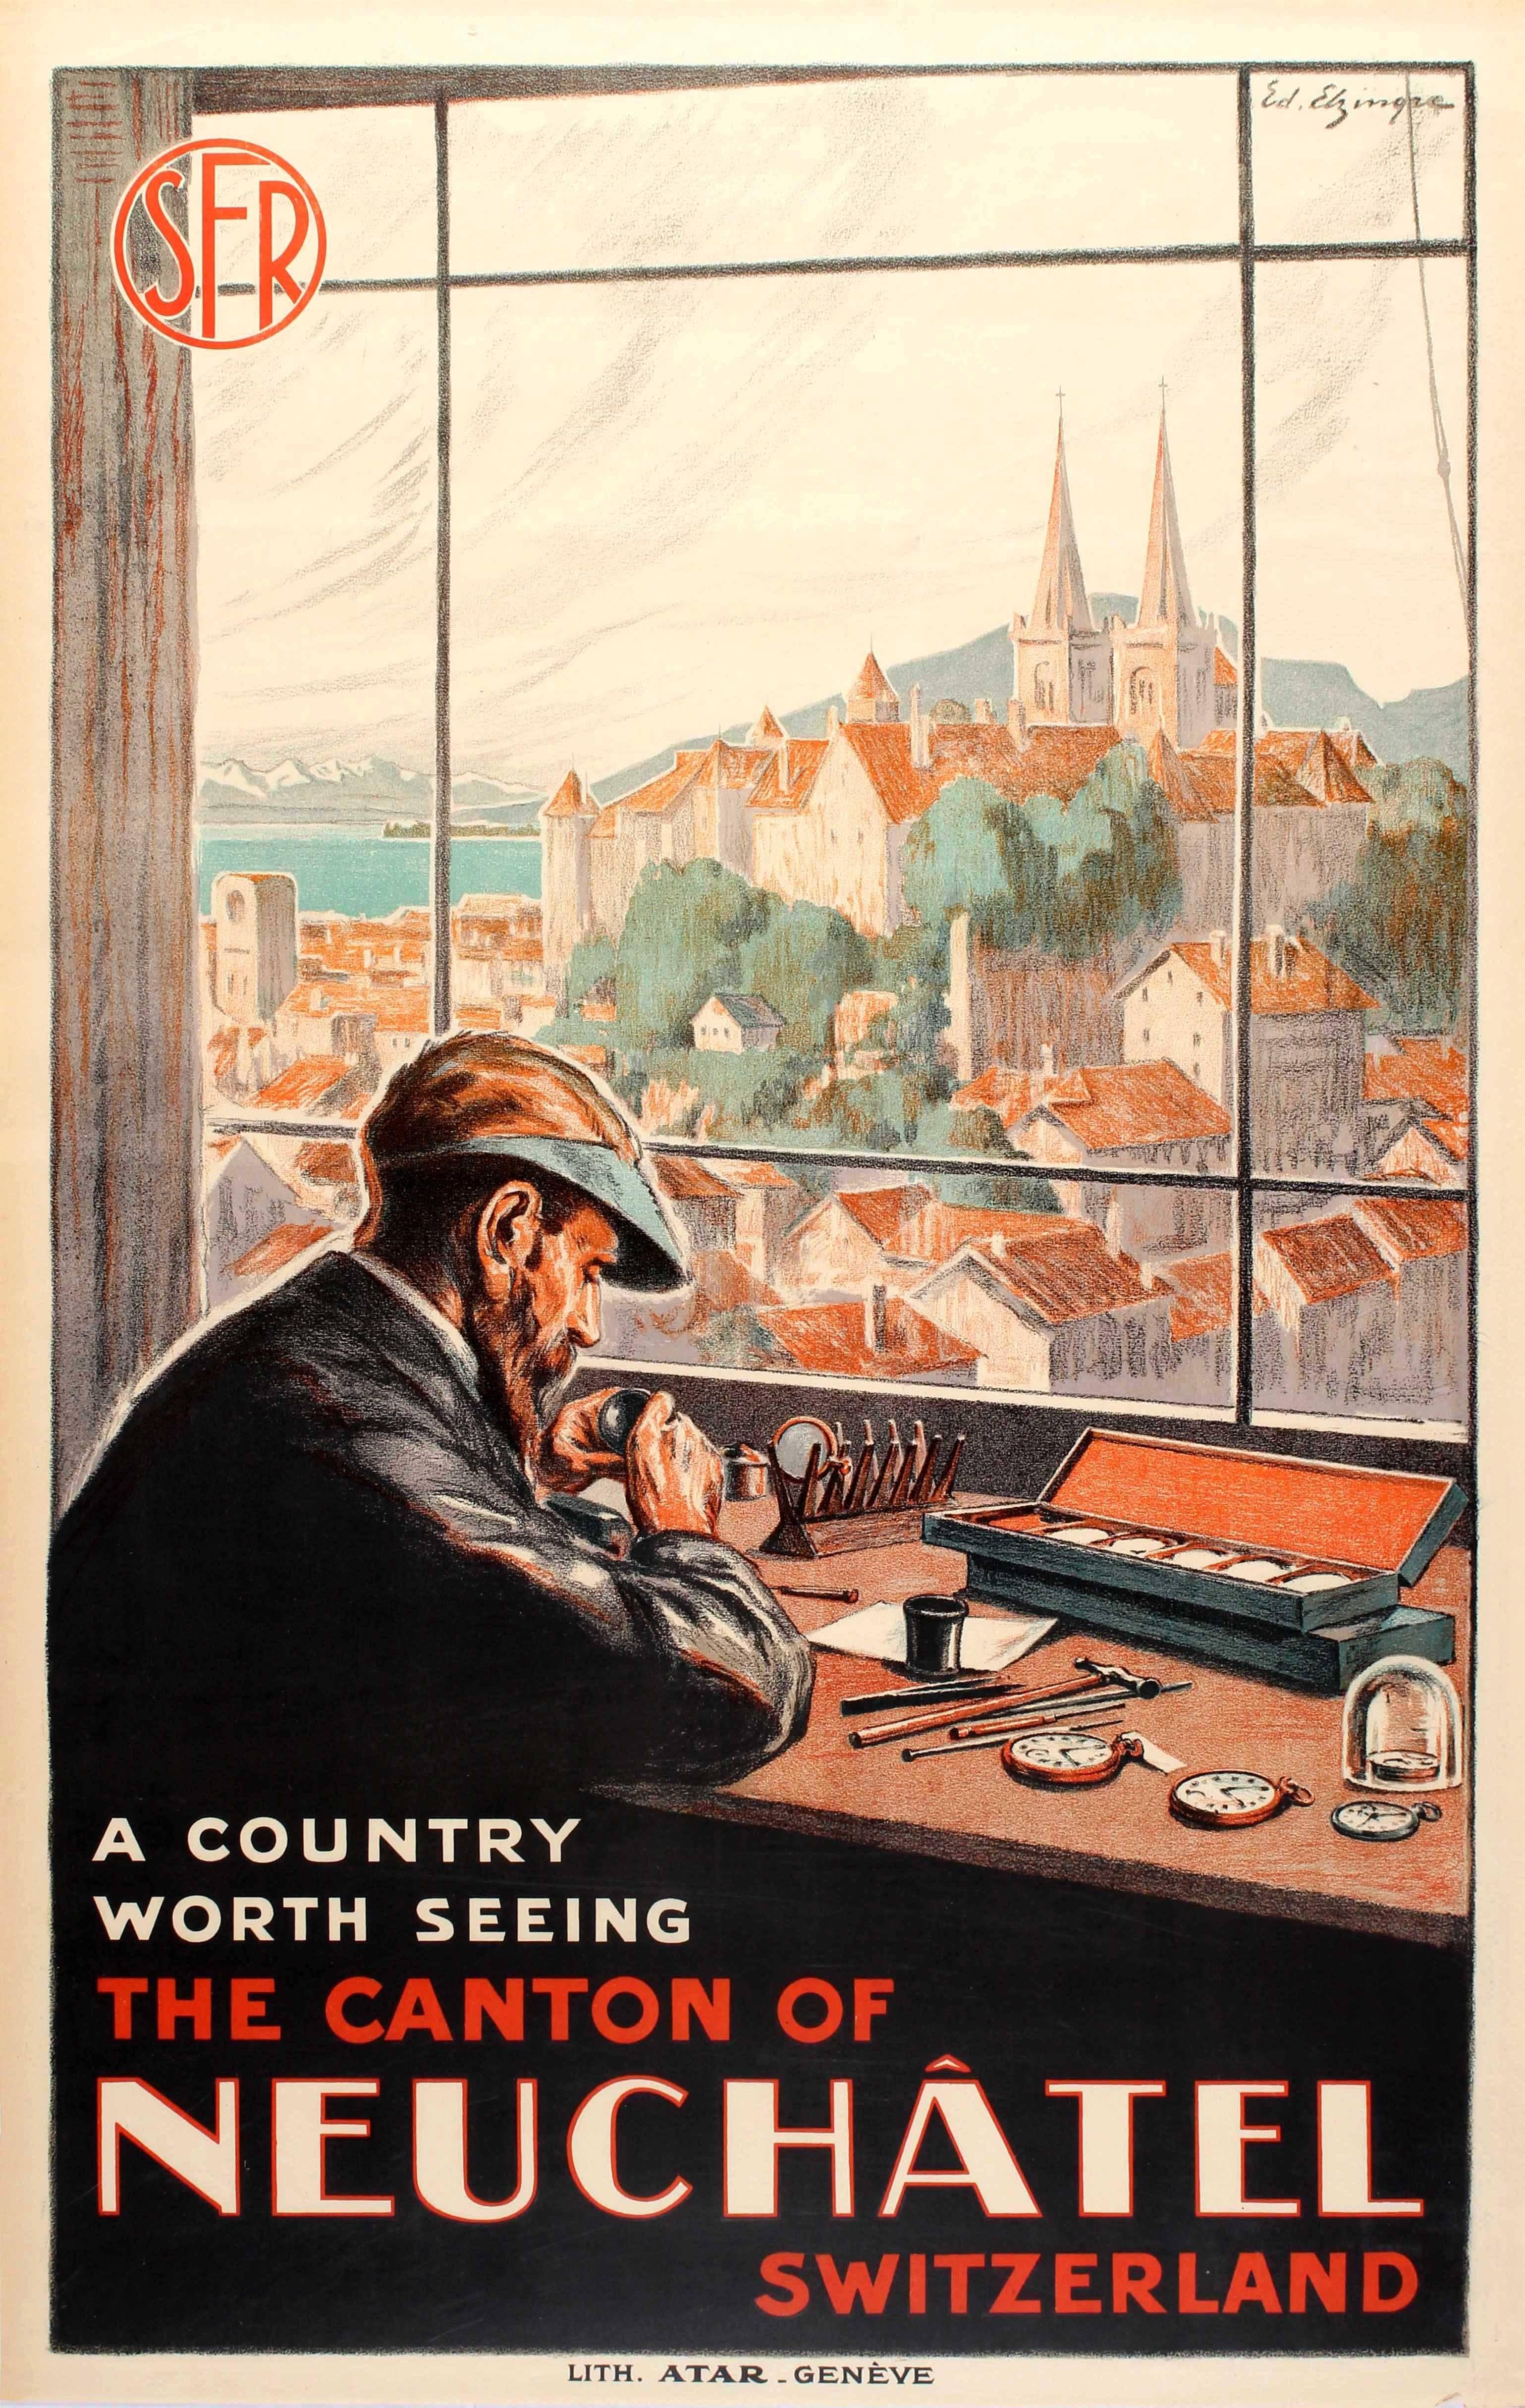 Edouard Elzingre Print - Original Vintage SFR Swiss Railway Poster For Neuchatel Featuring A Watch Maker